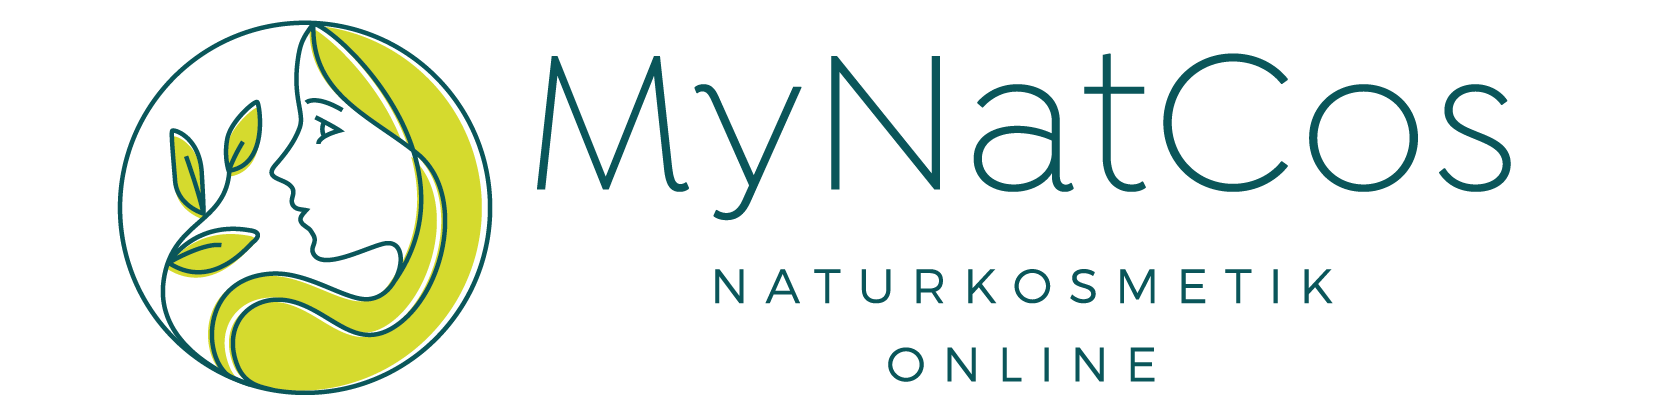 MyNatCos Logo verlinkung